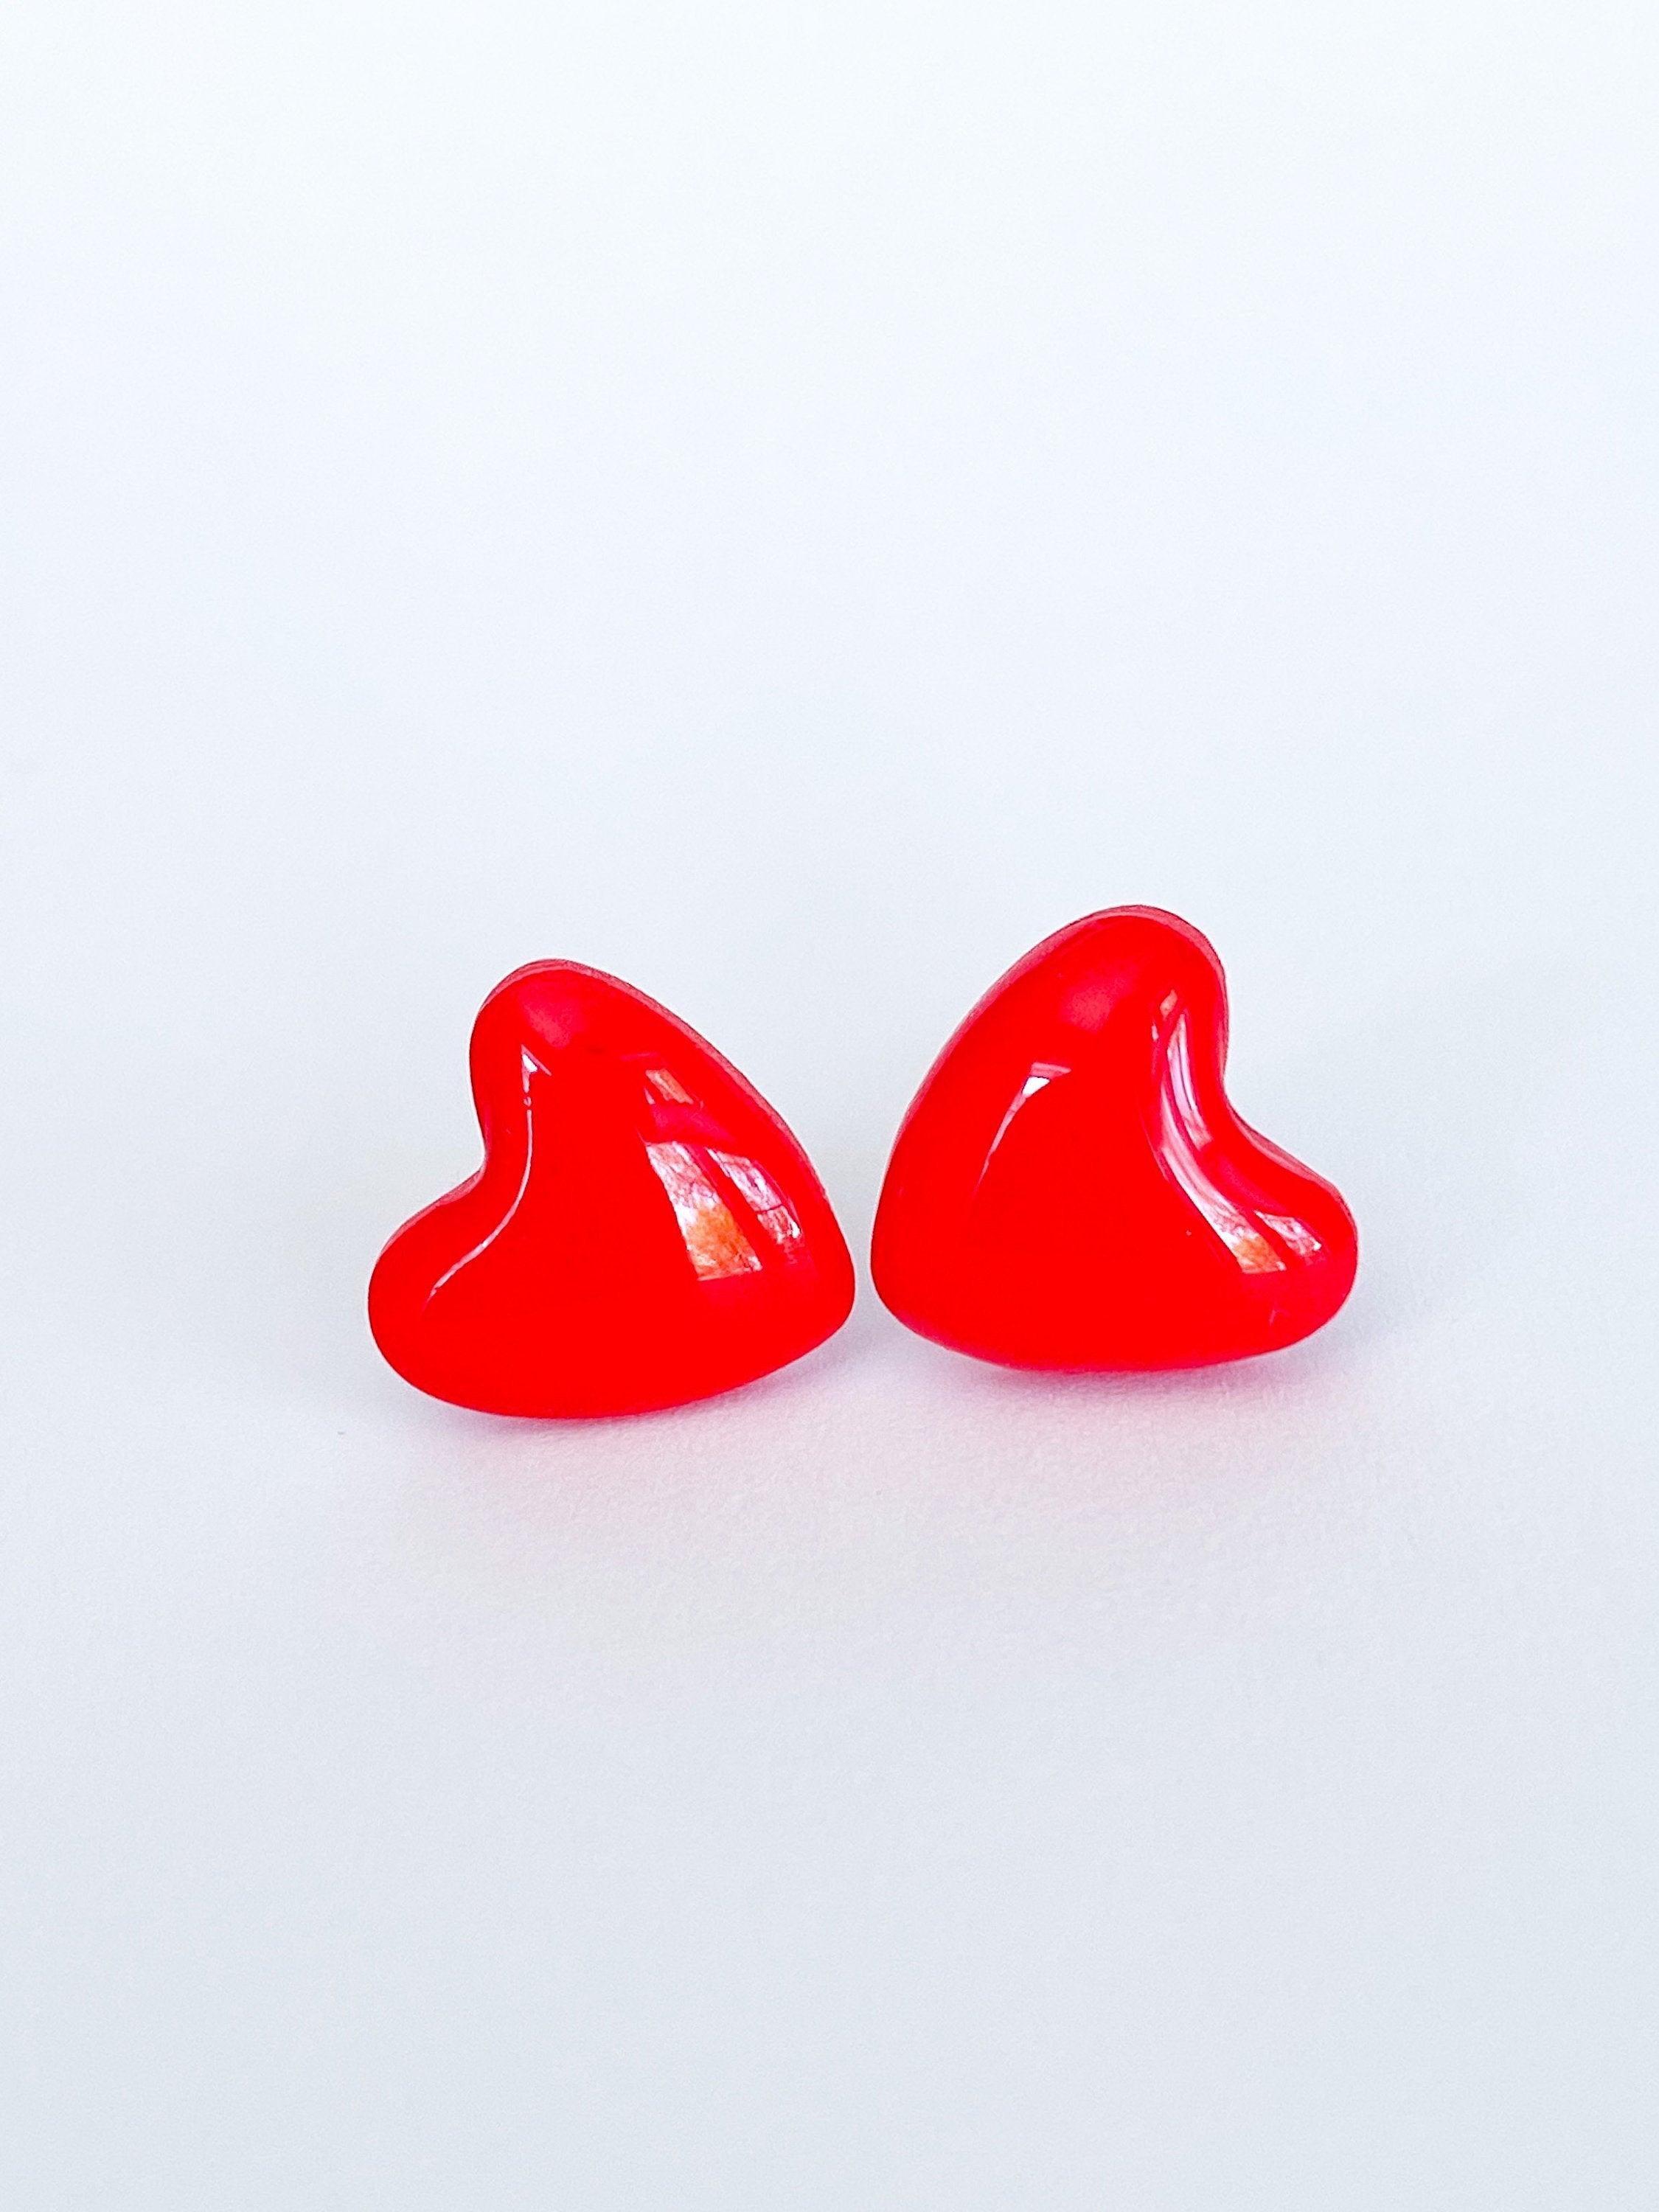 Red heart studs earrings freeshipping - Ollijewelry